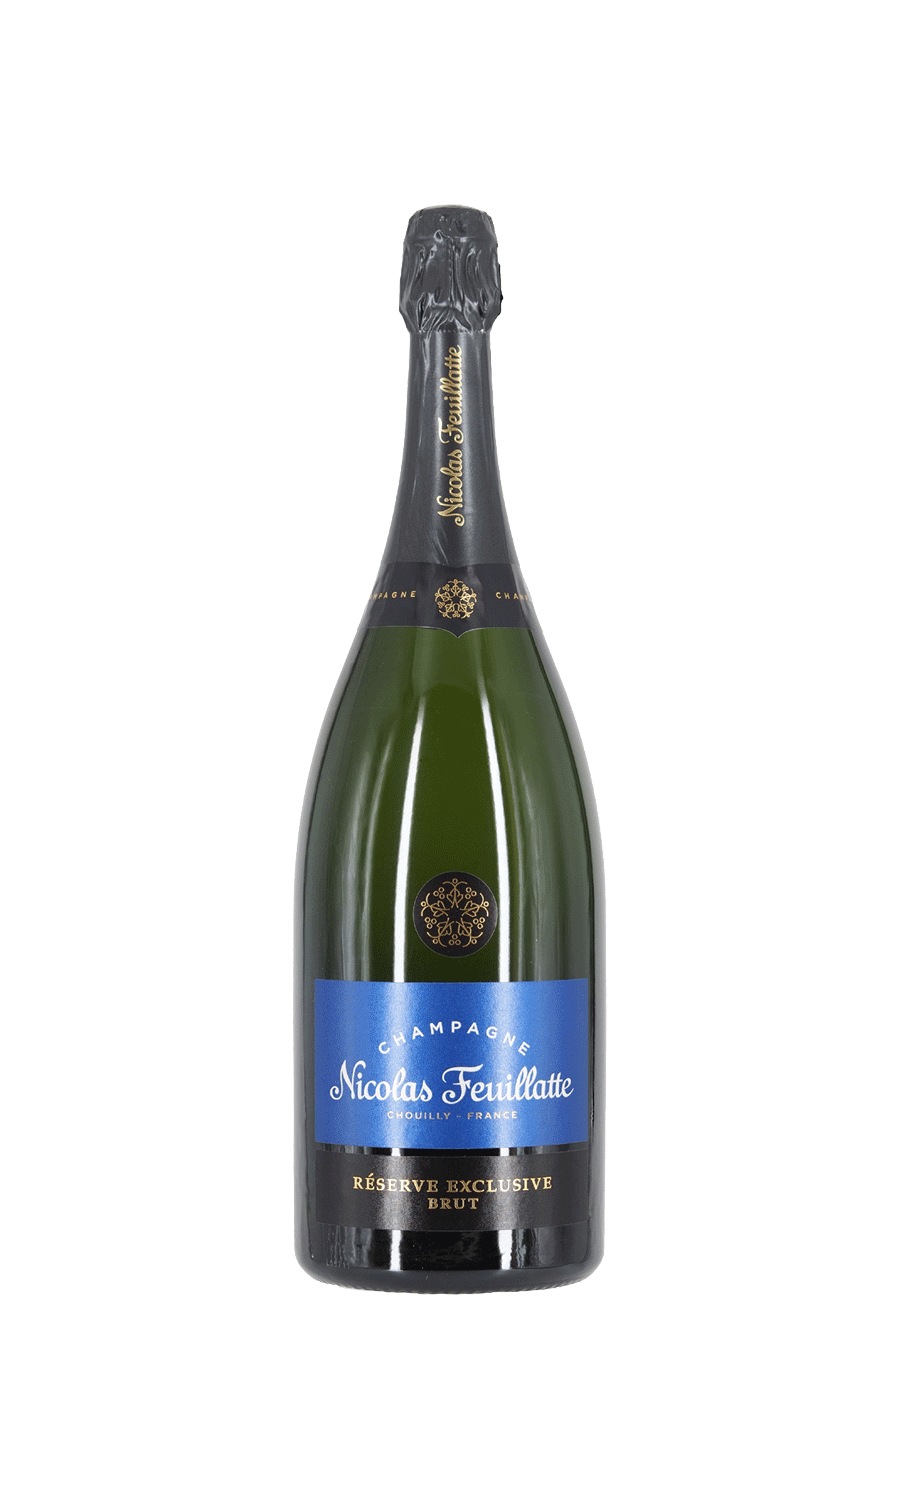 Nicolas Feuillatte Champagne Blanc 0,375 L Reserve Exclusive brut demi